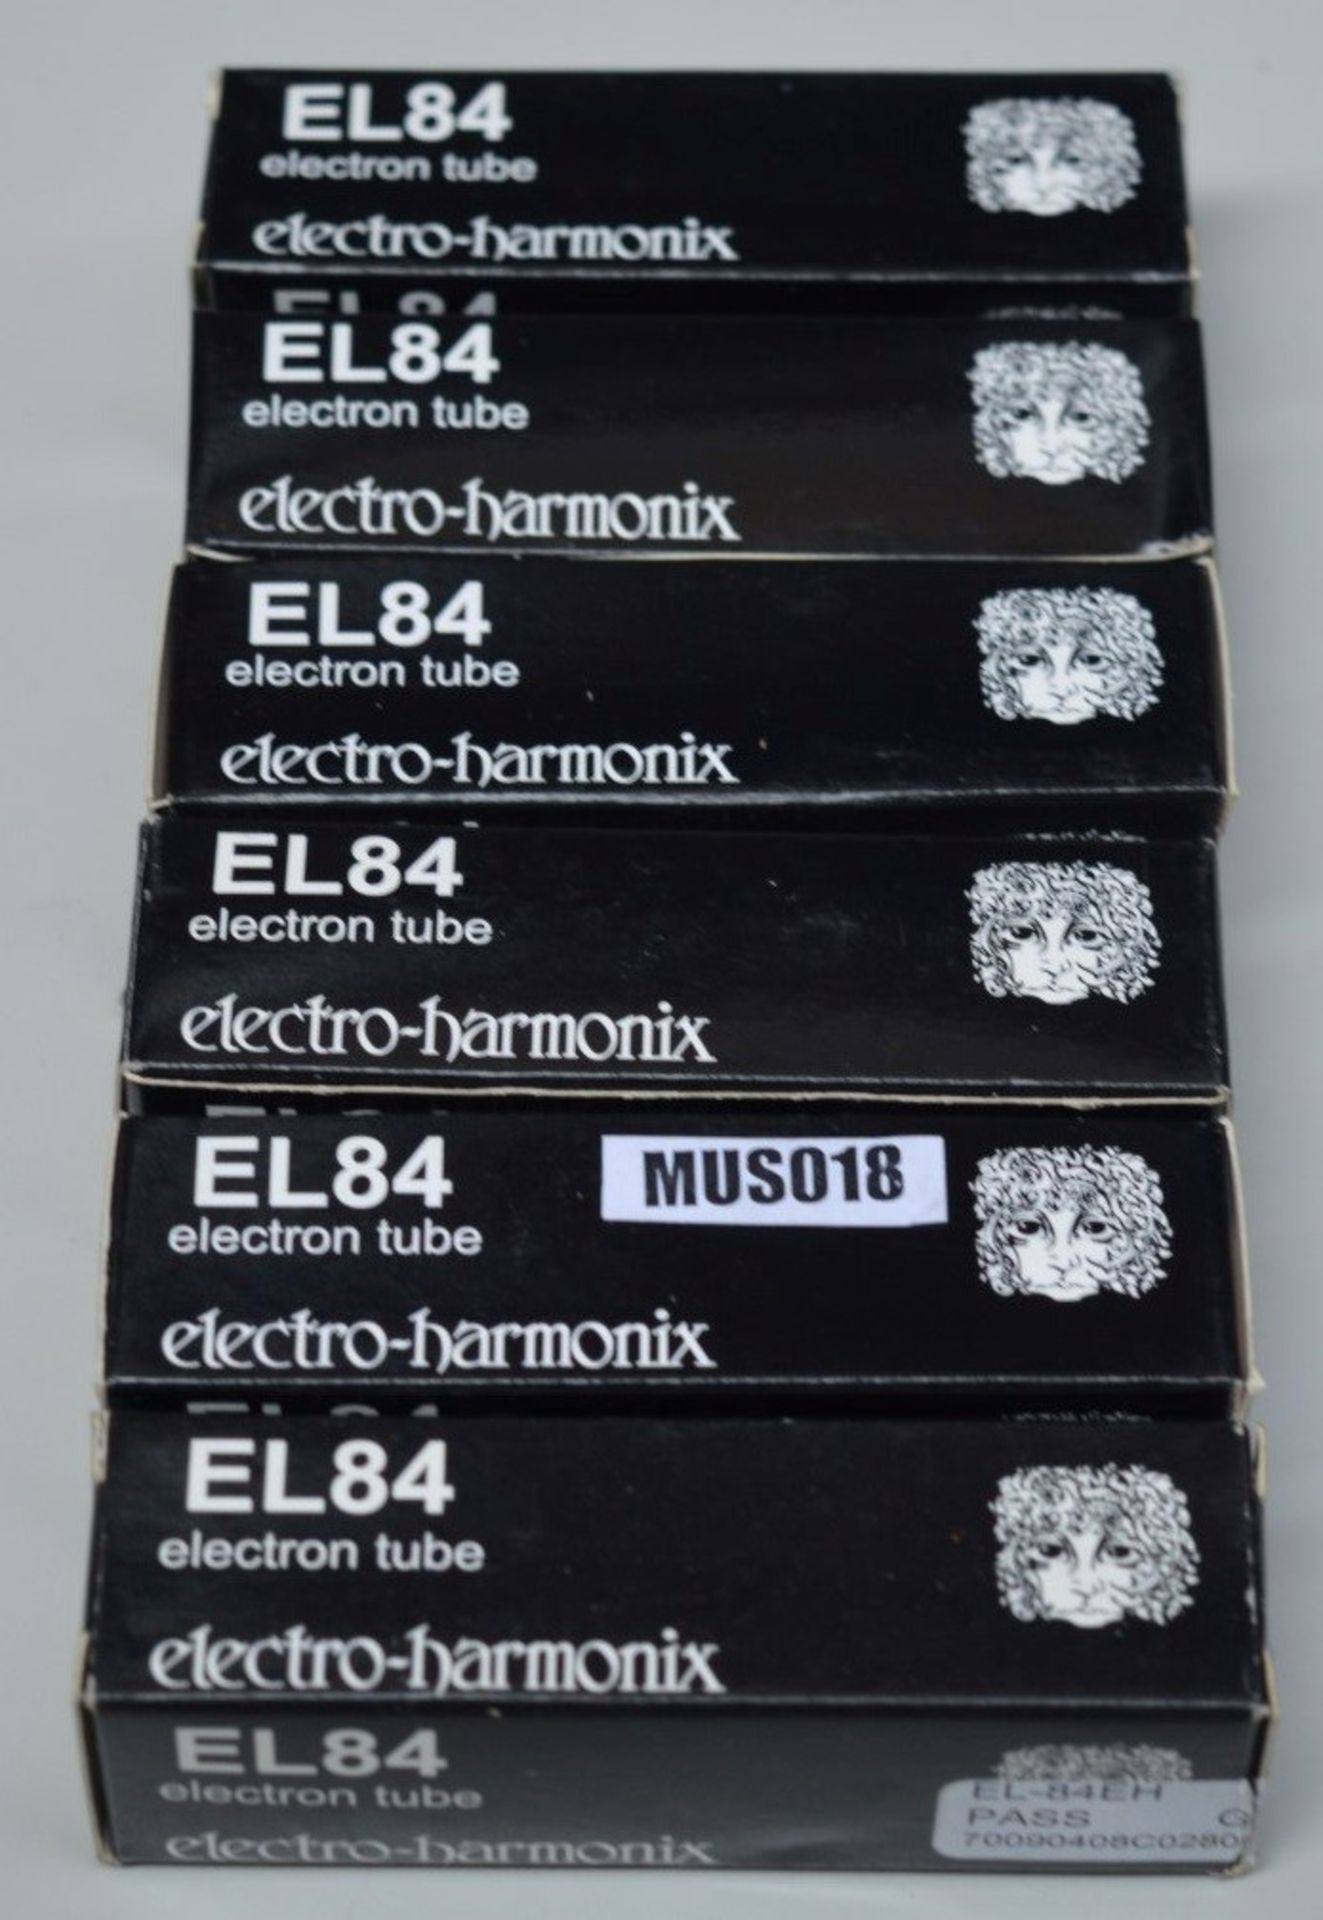 6 x Electro Harmonix EL84 Power Tube Amp Valves - New Boxed Stock - CL020 - Ref Mus018 - Location: